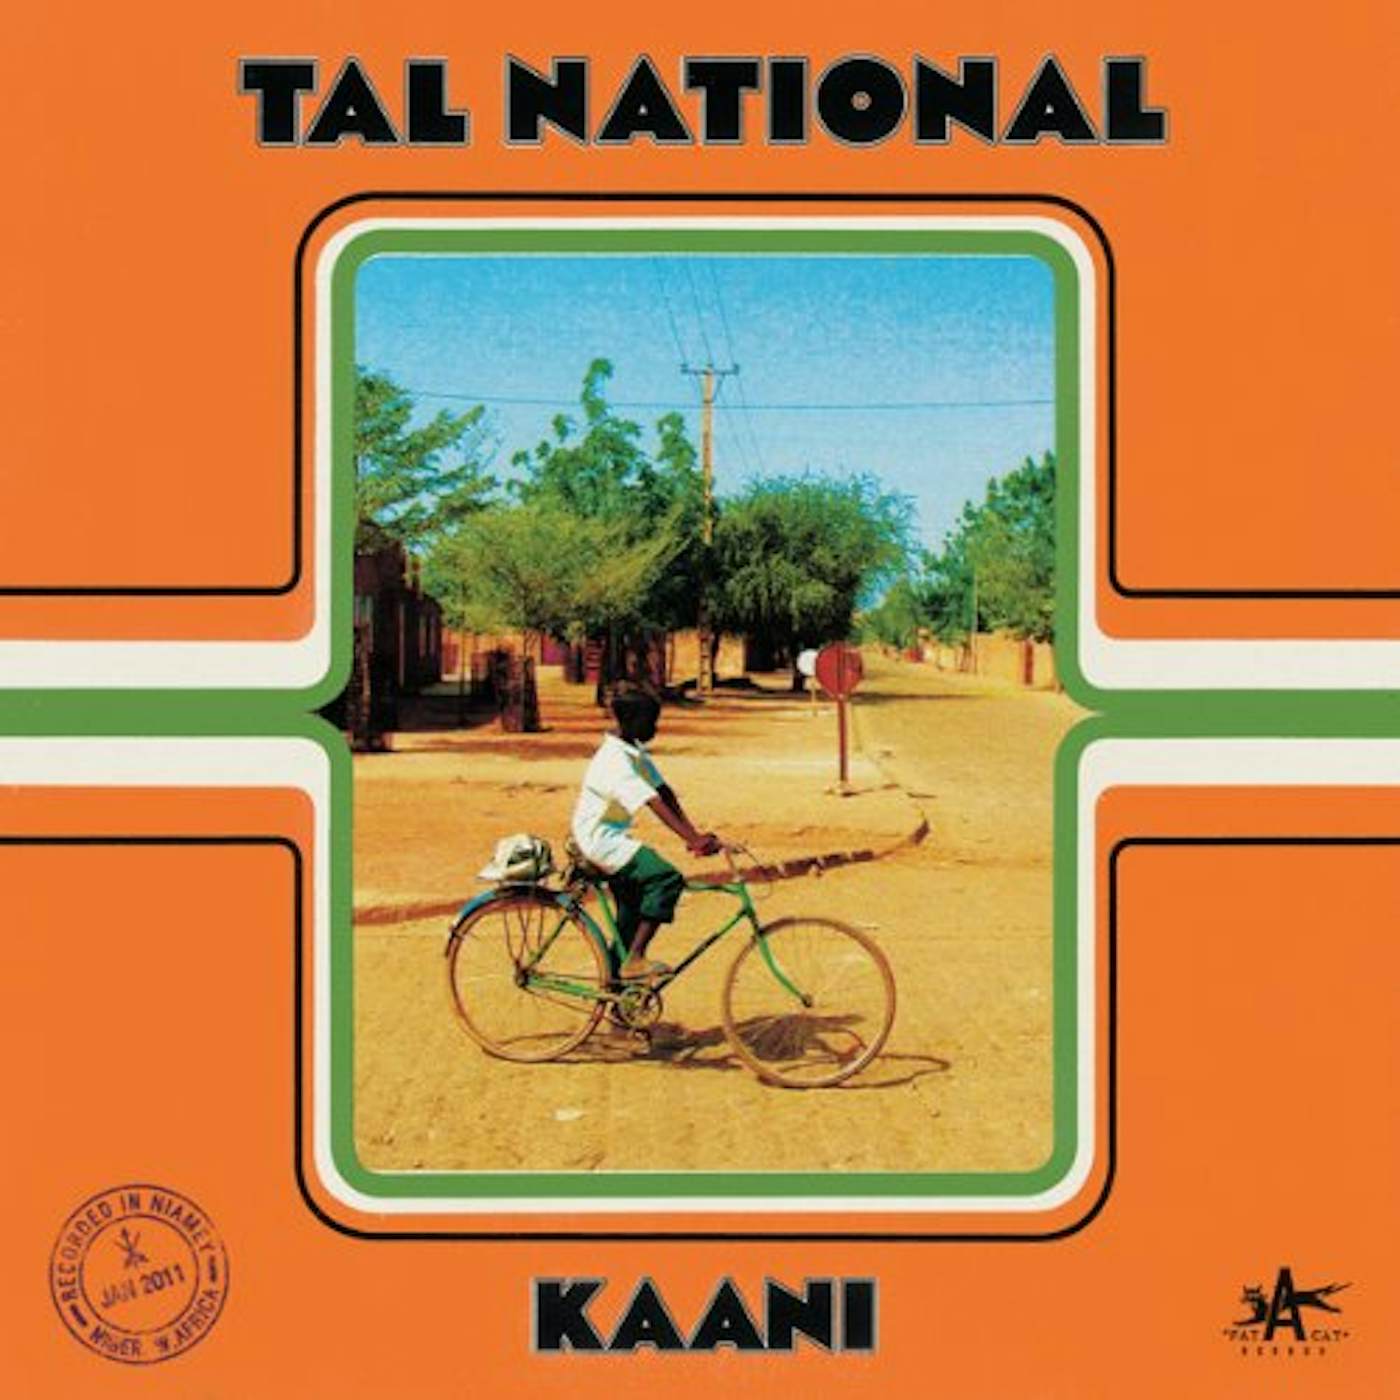 Tal National Kaani Vinyl Record